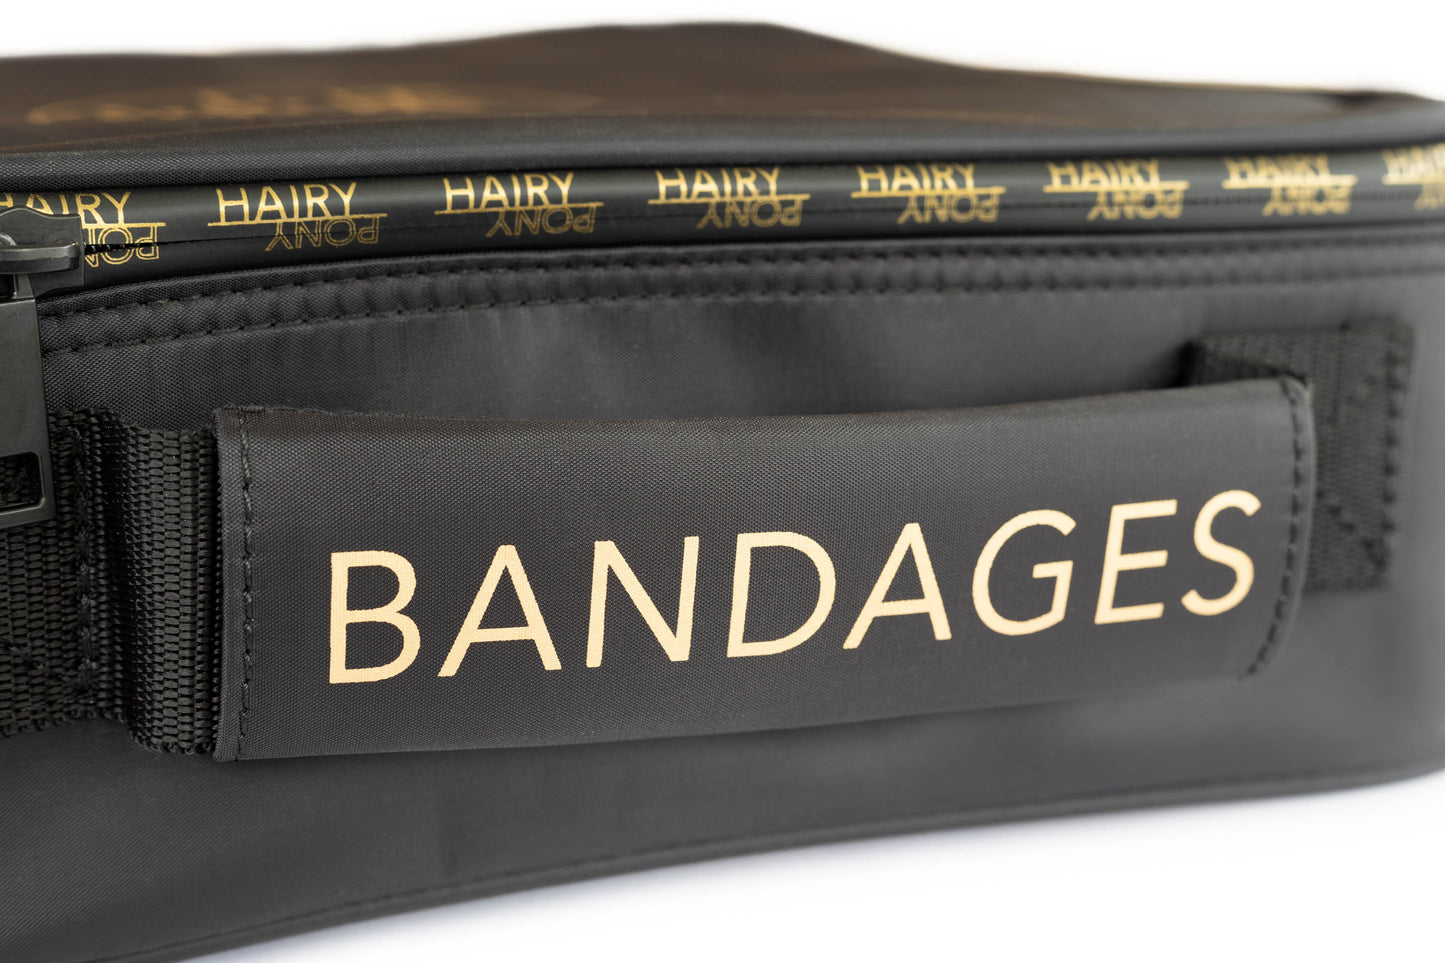 Storage Bag Label on a bag that reads "Bandages"